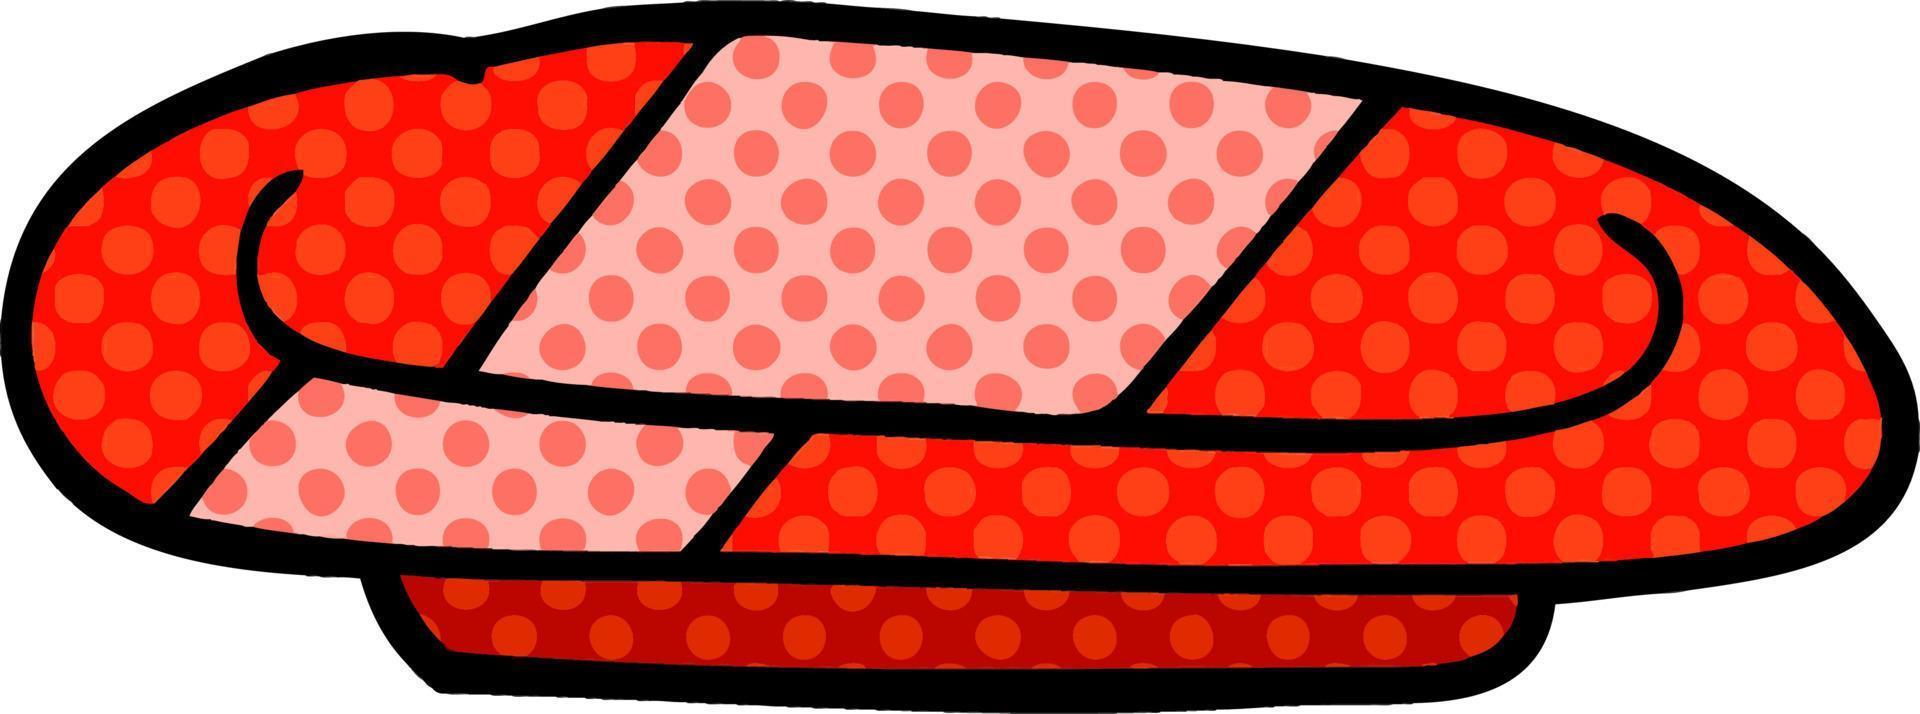 cartoon doodle striped plate vector